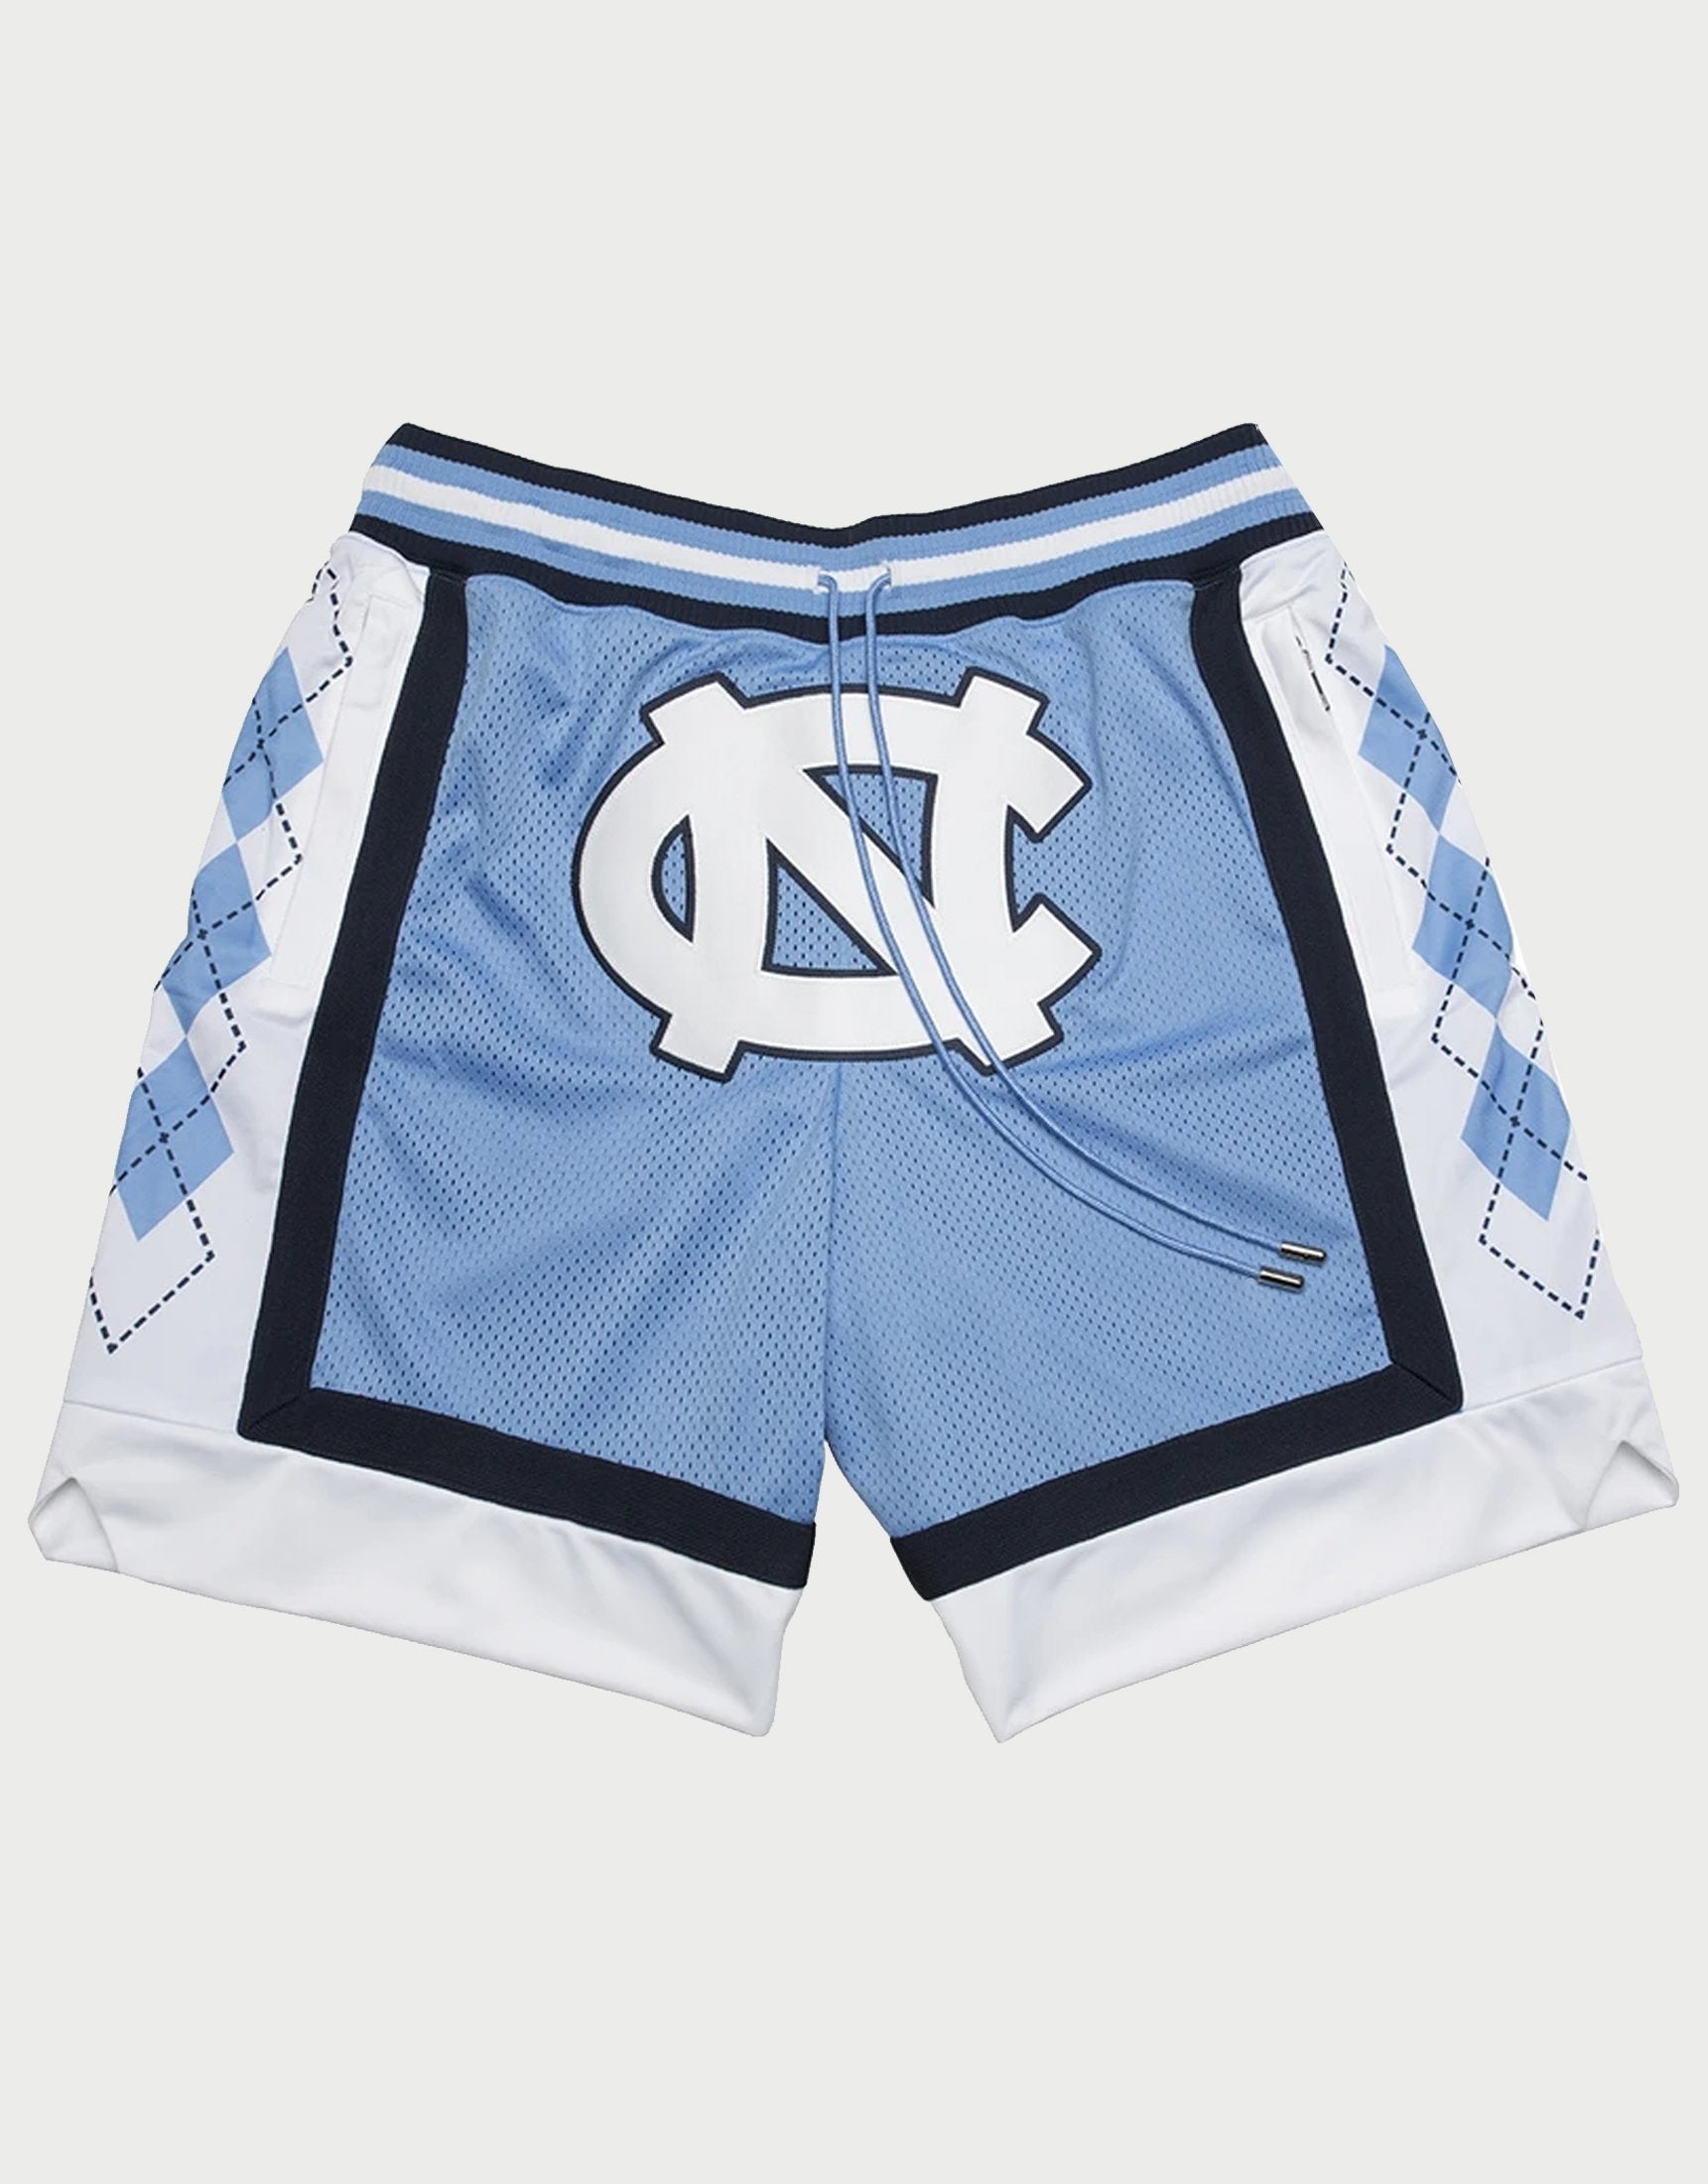 University of North Carolina Blue Basketball Shorts